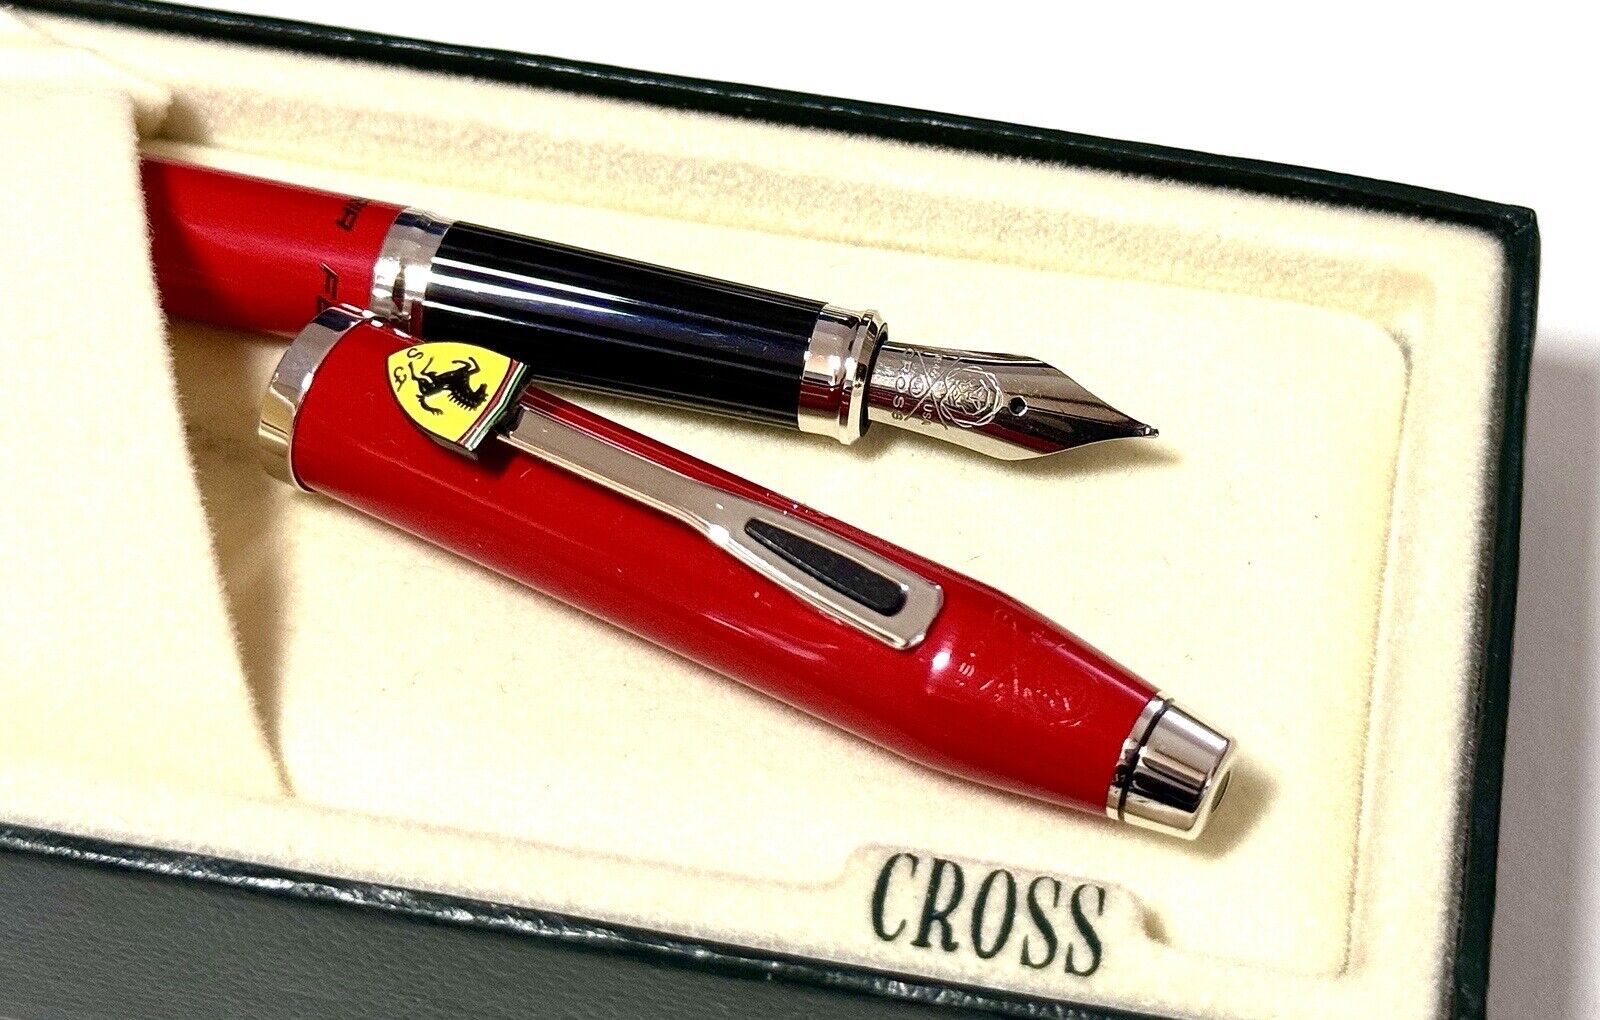 Cross Century II Fountain Pen “Ferrari” Red Lacquer/Rhodium Plating New W/Box